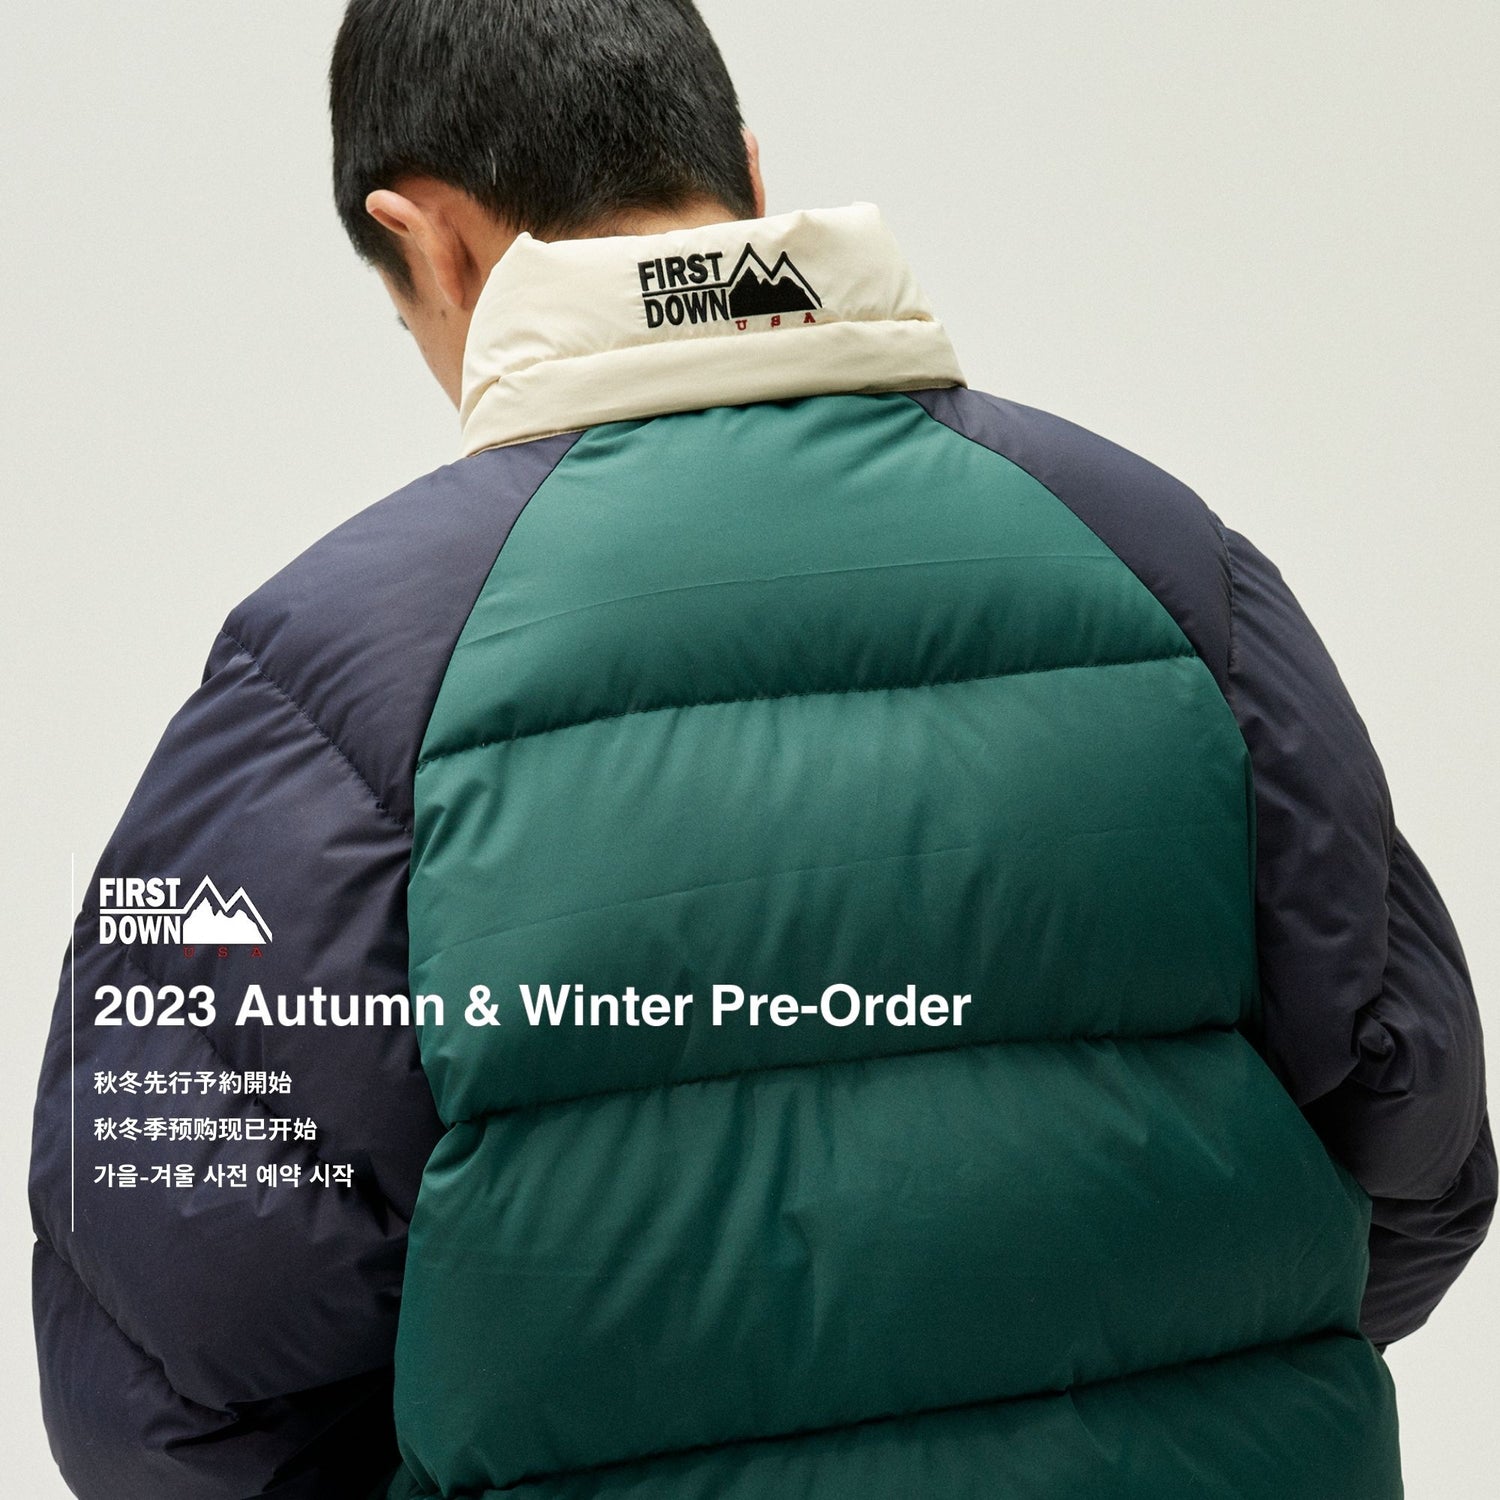 2023 Autumn & Winter Pre-Order | FIRST DOWN USA